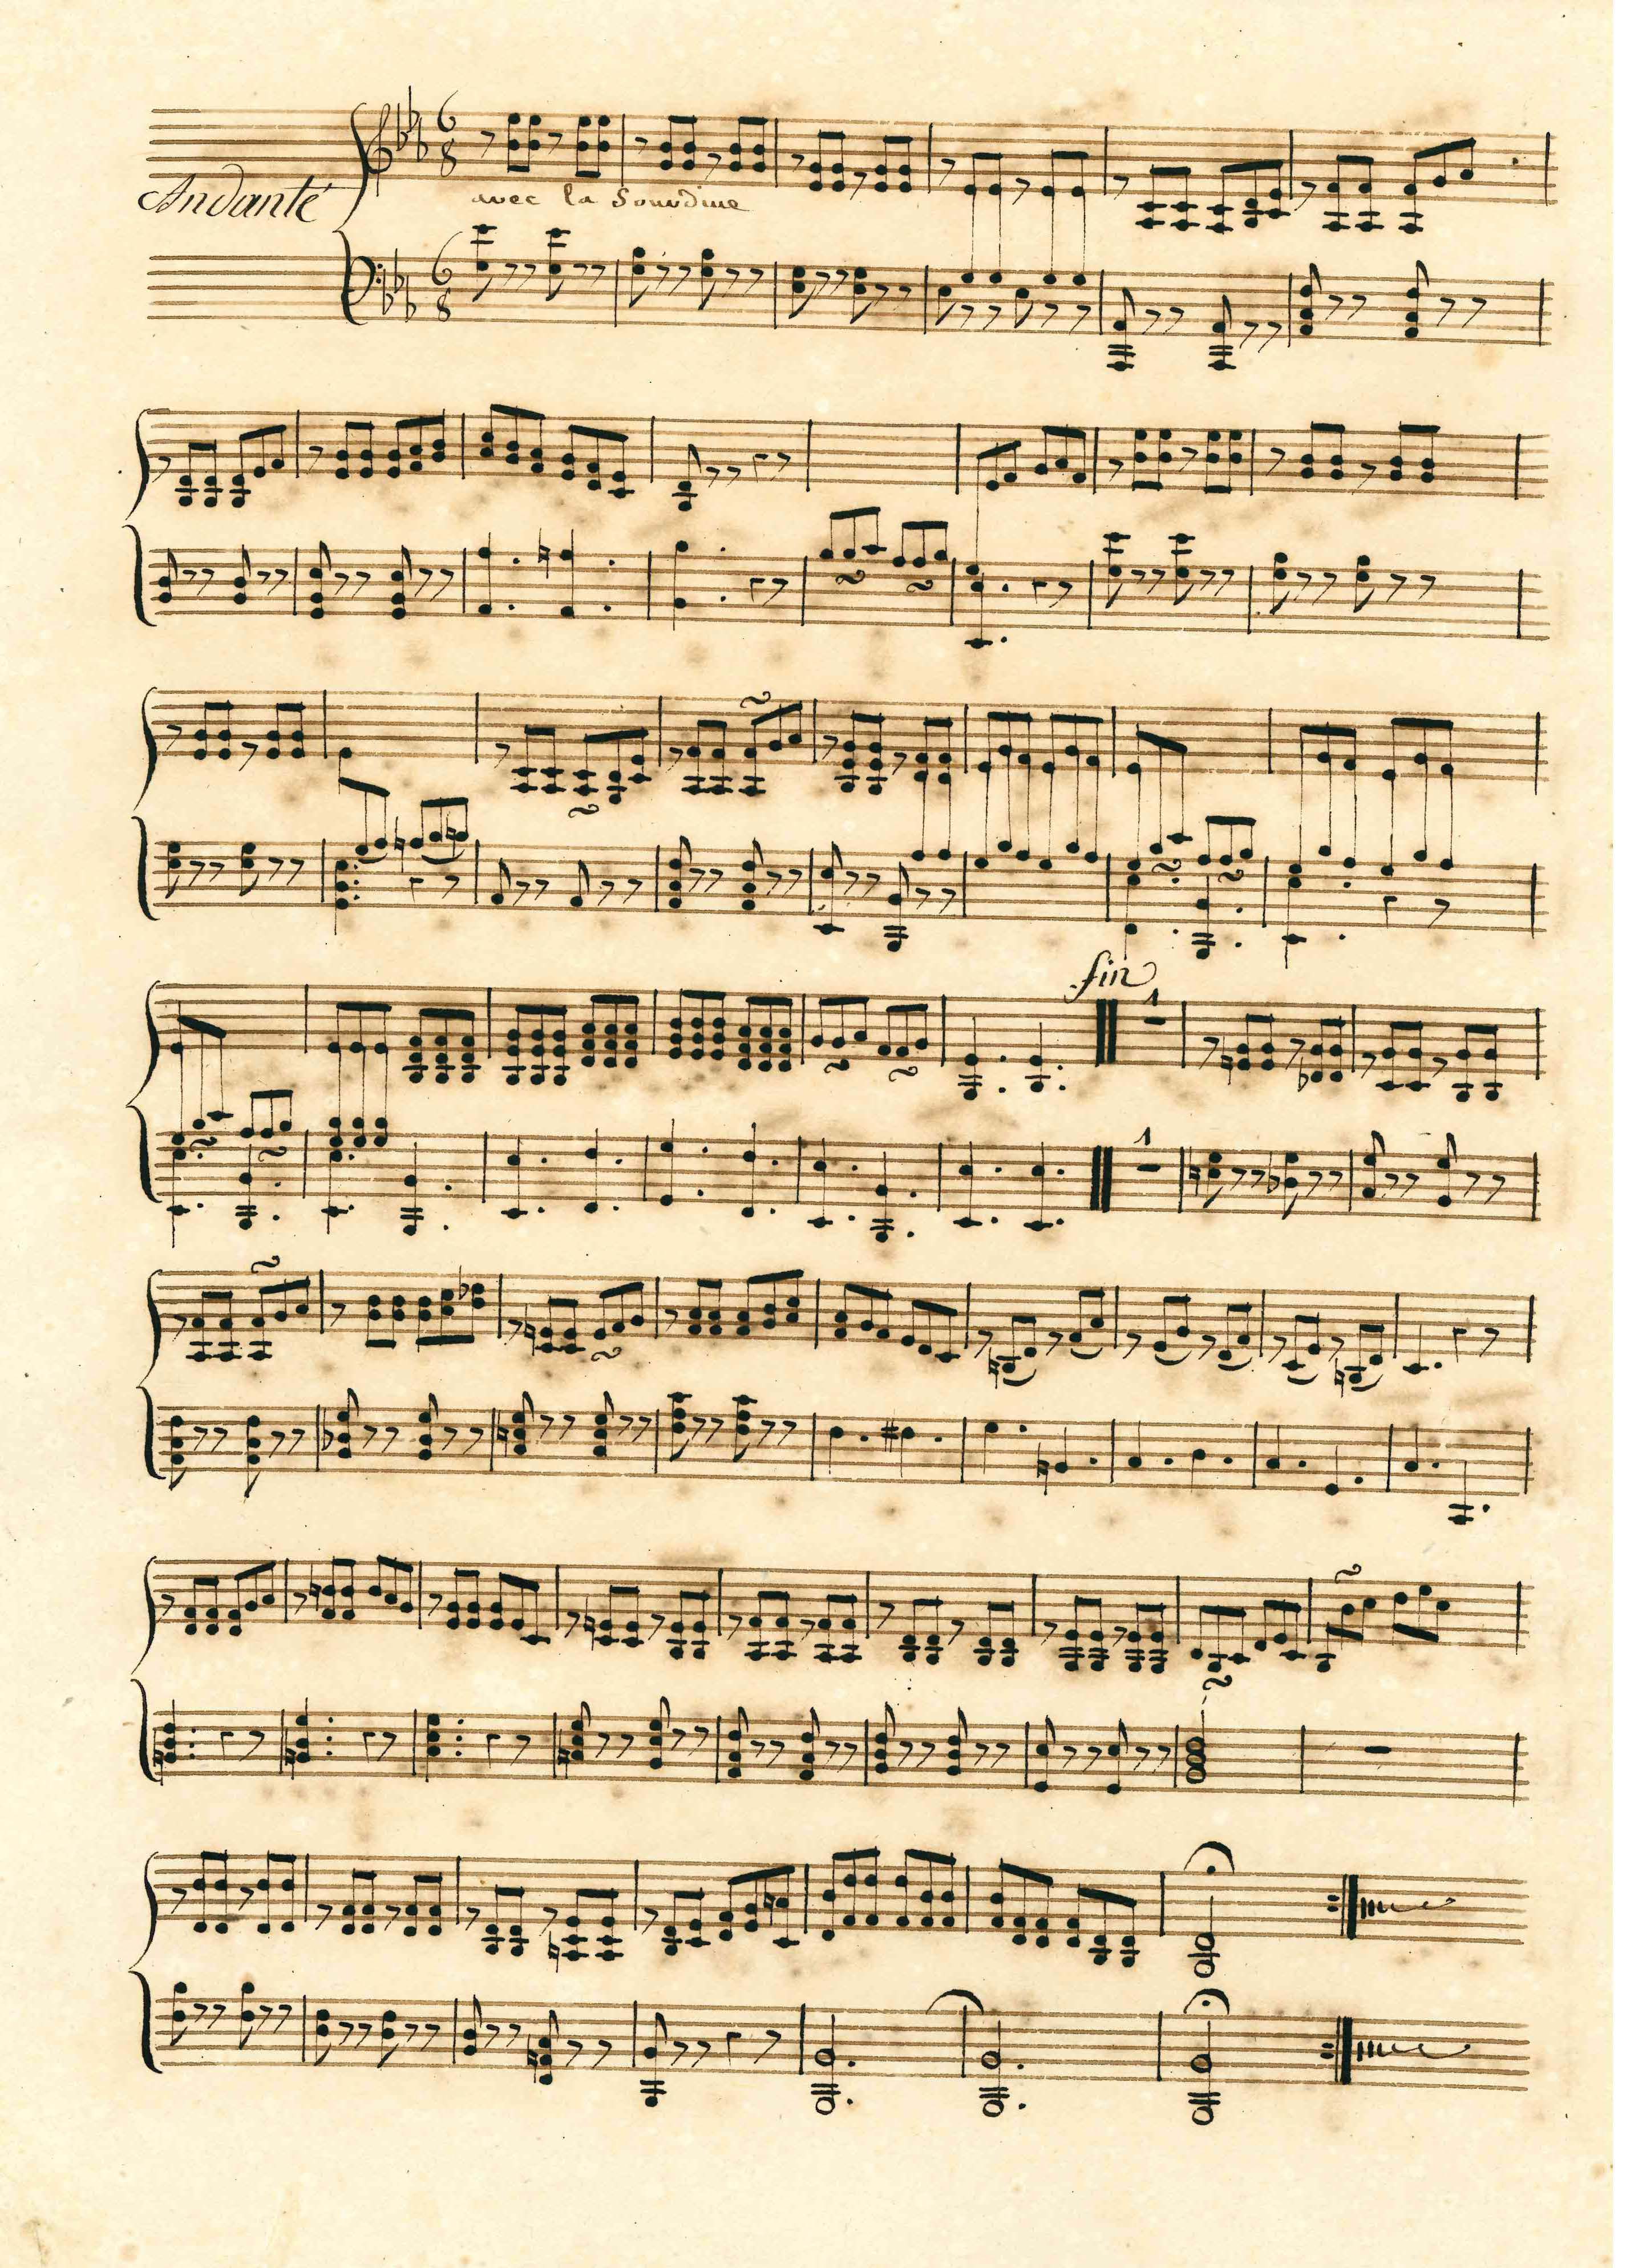 Brillon C-minor duo slow movement - harpsichord part